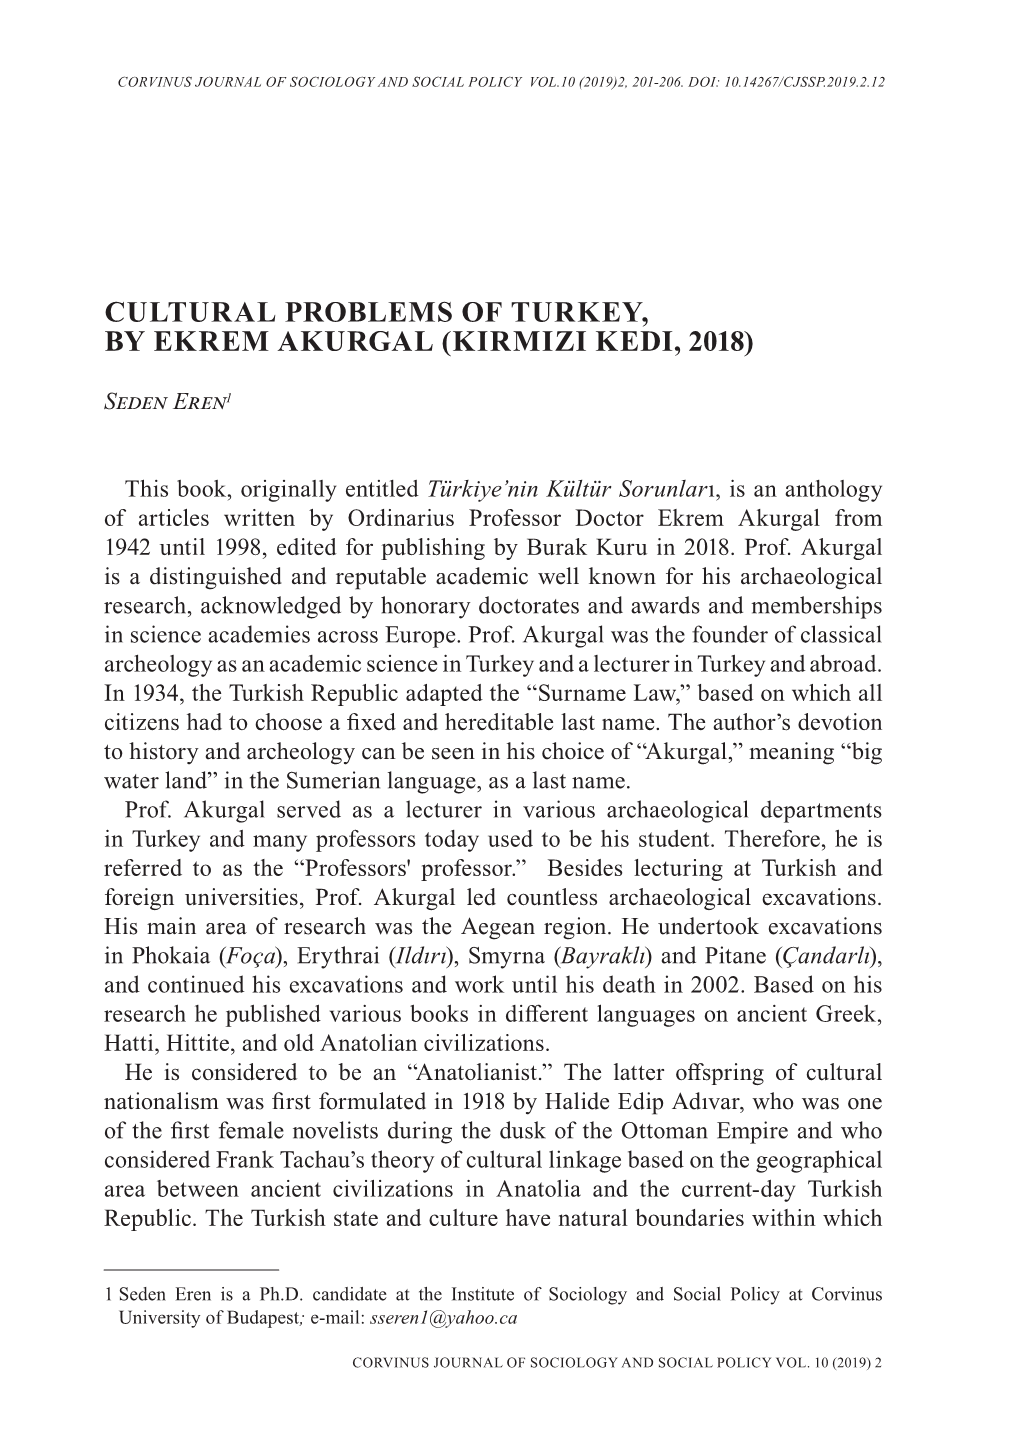 Cultural Problems of Turkey, by Ekrem Akurgal (Kirmizi Kedi, 2018)